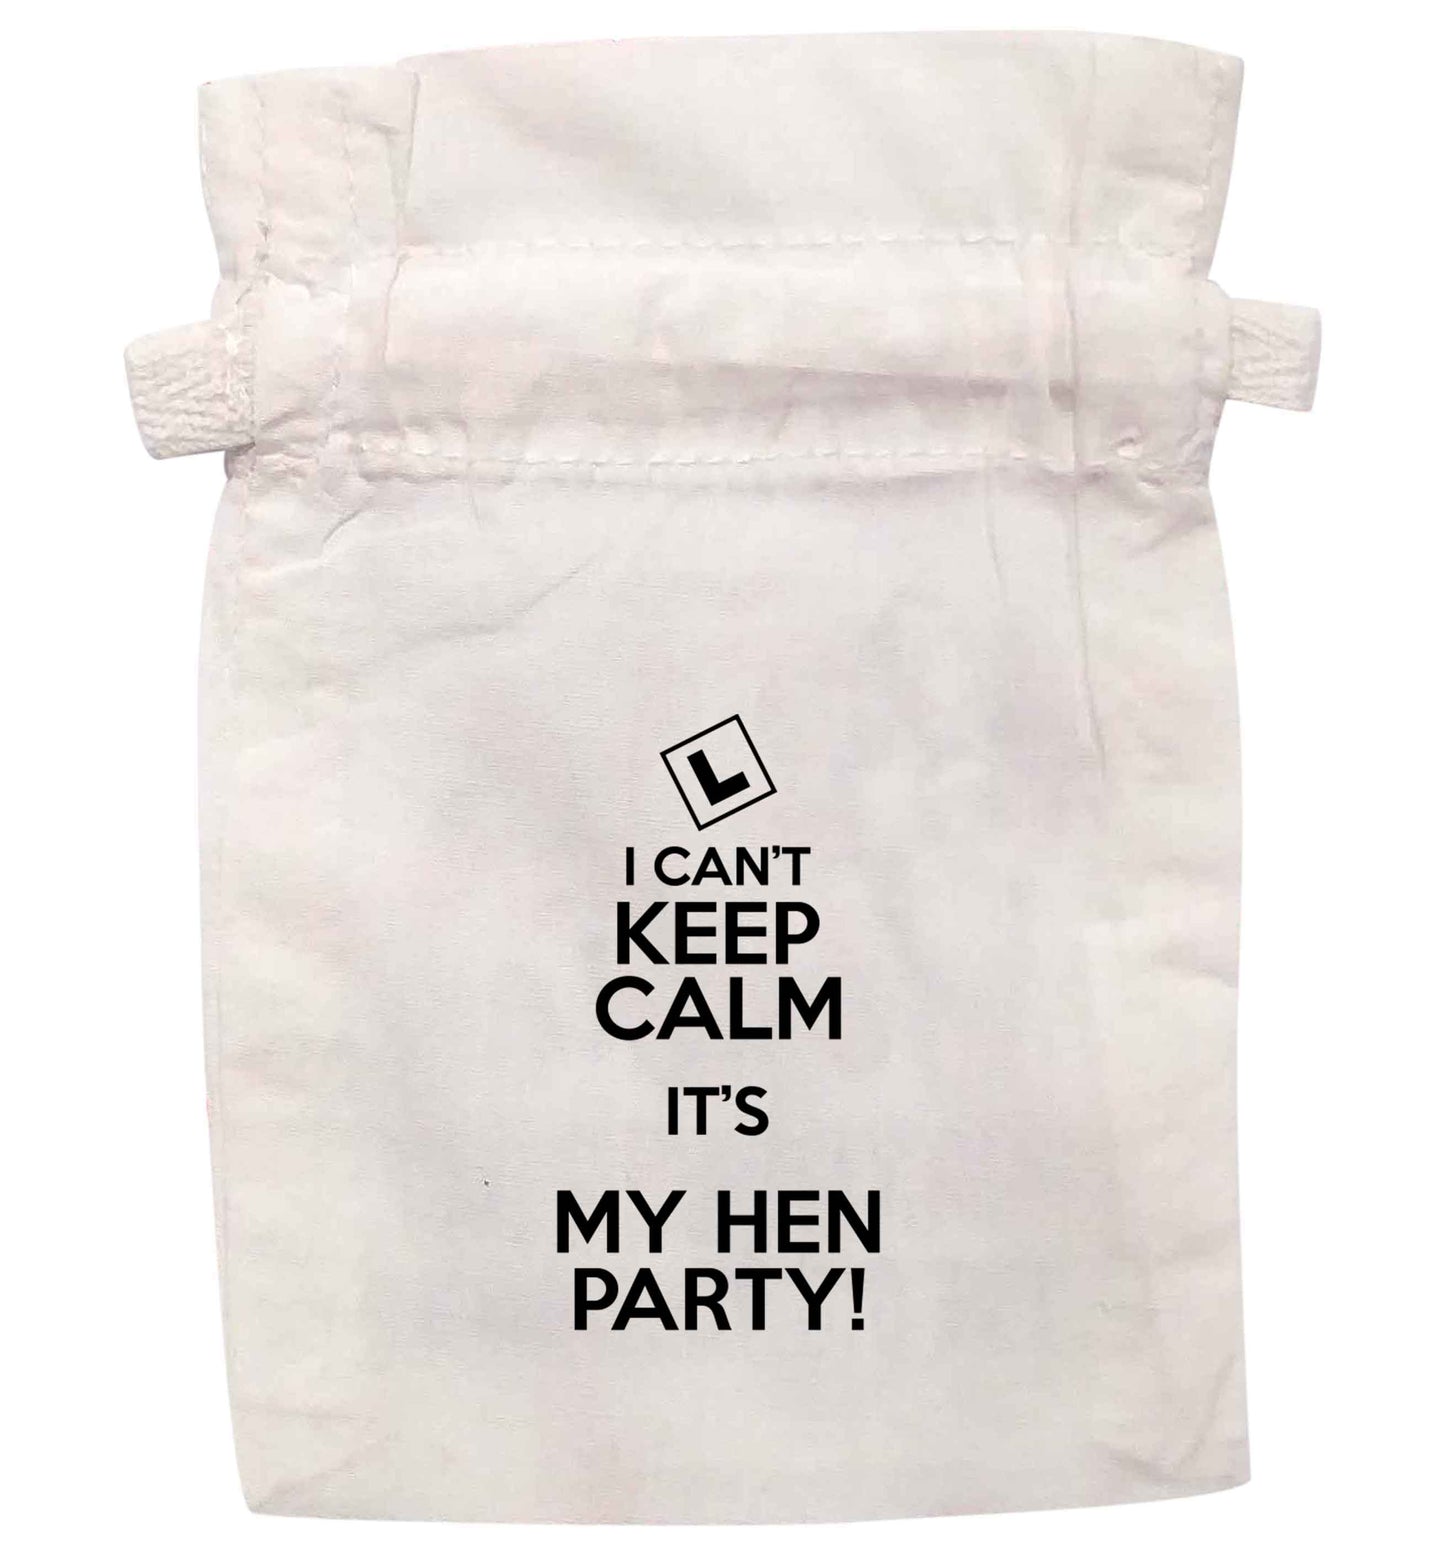 I can't keep calm it's my hen party | XS - L | Pouch / Drawstring bag / Sack | Organic Cotton | Bulk discounts available!